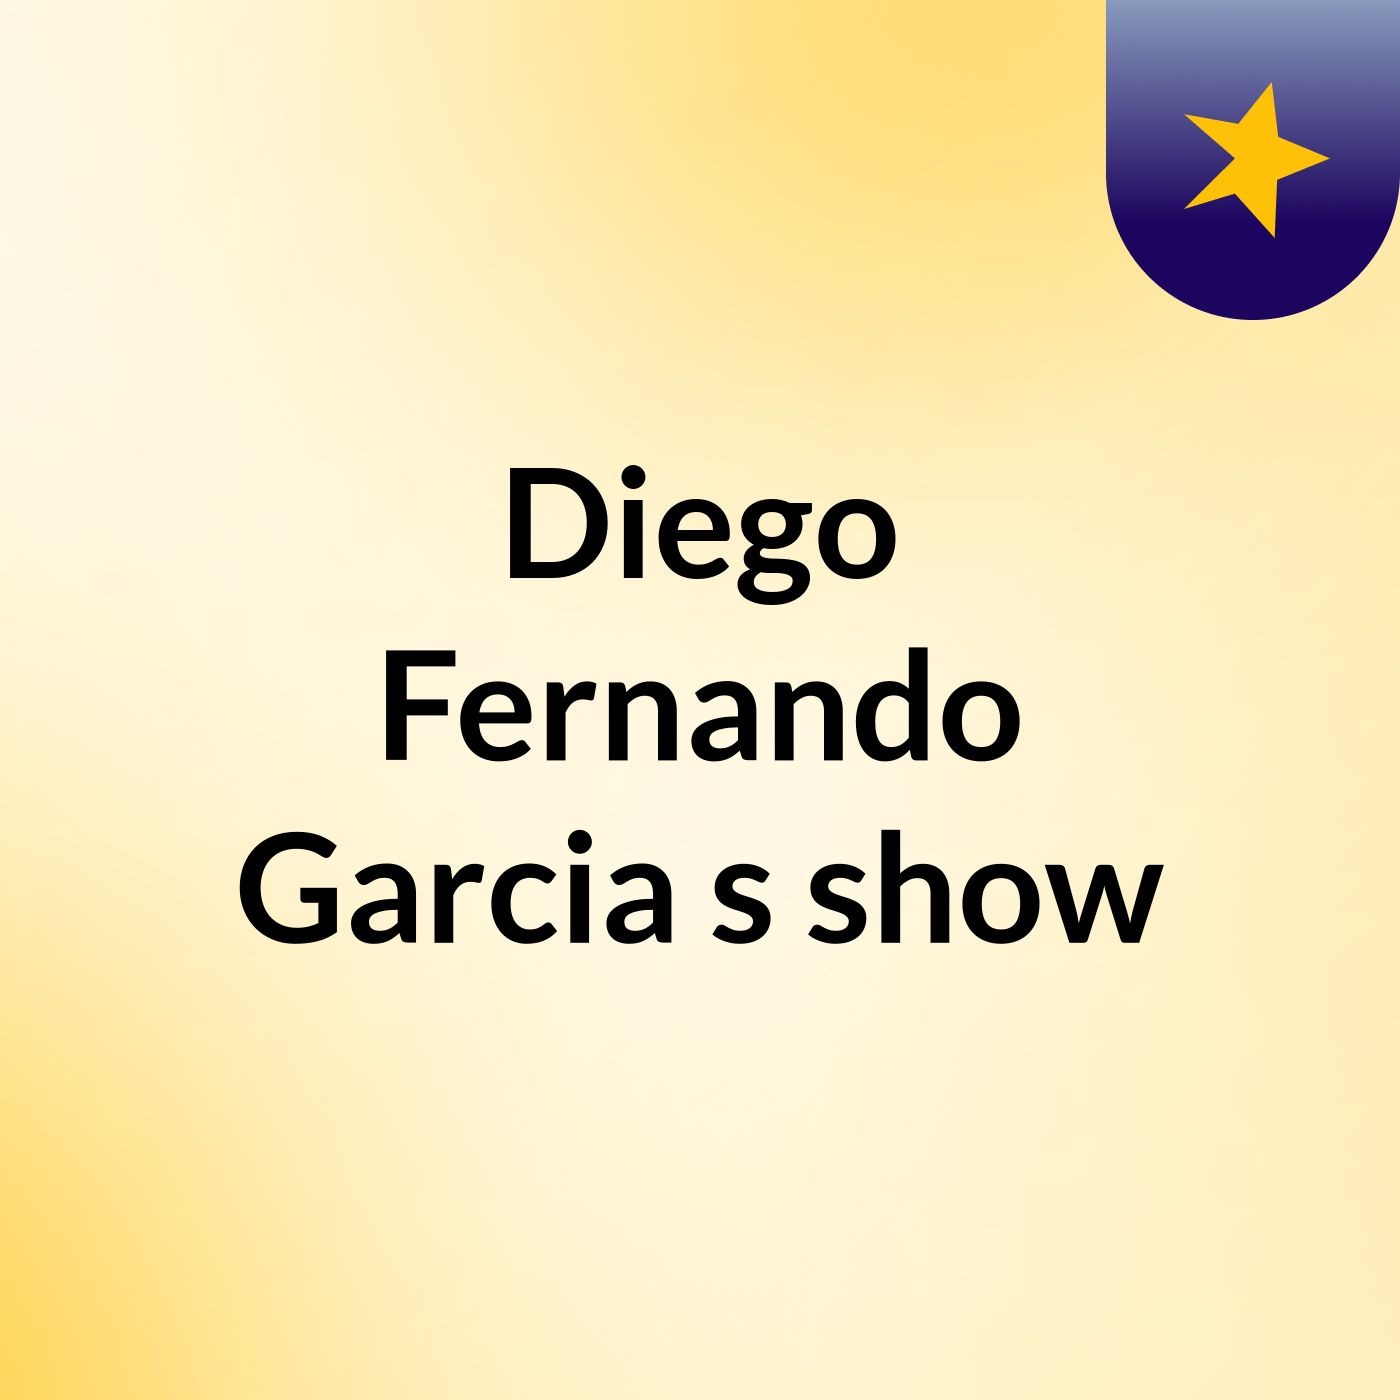 Diego Fernando Garcia's show